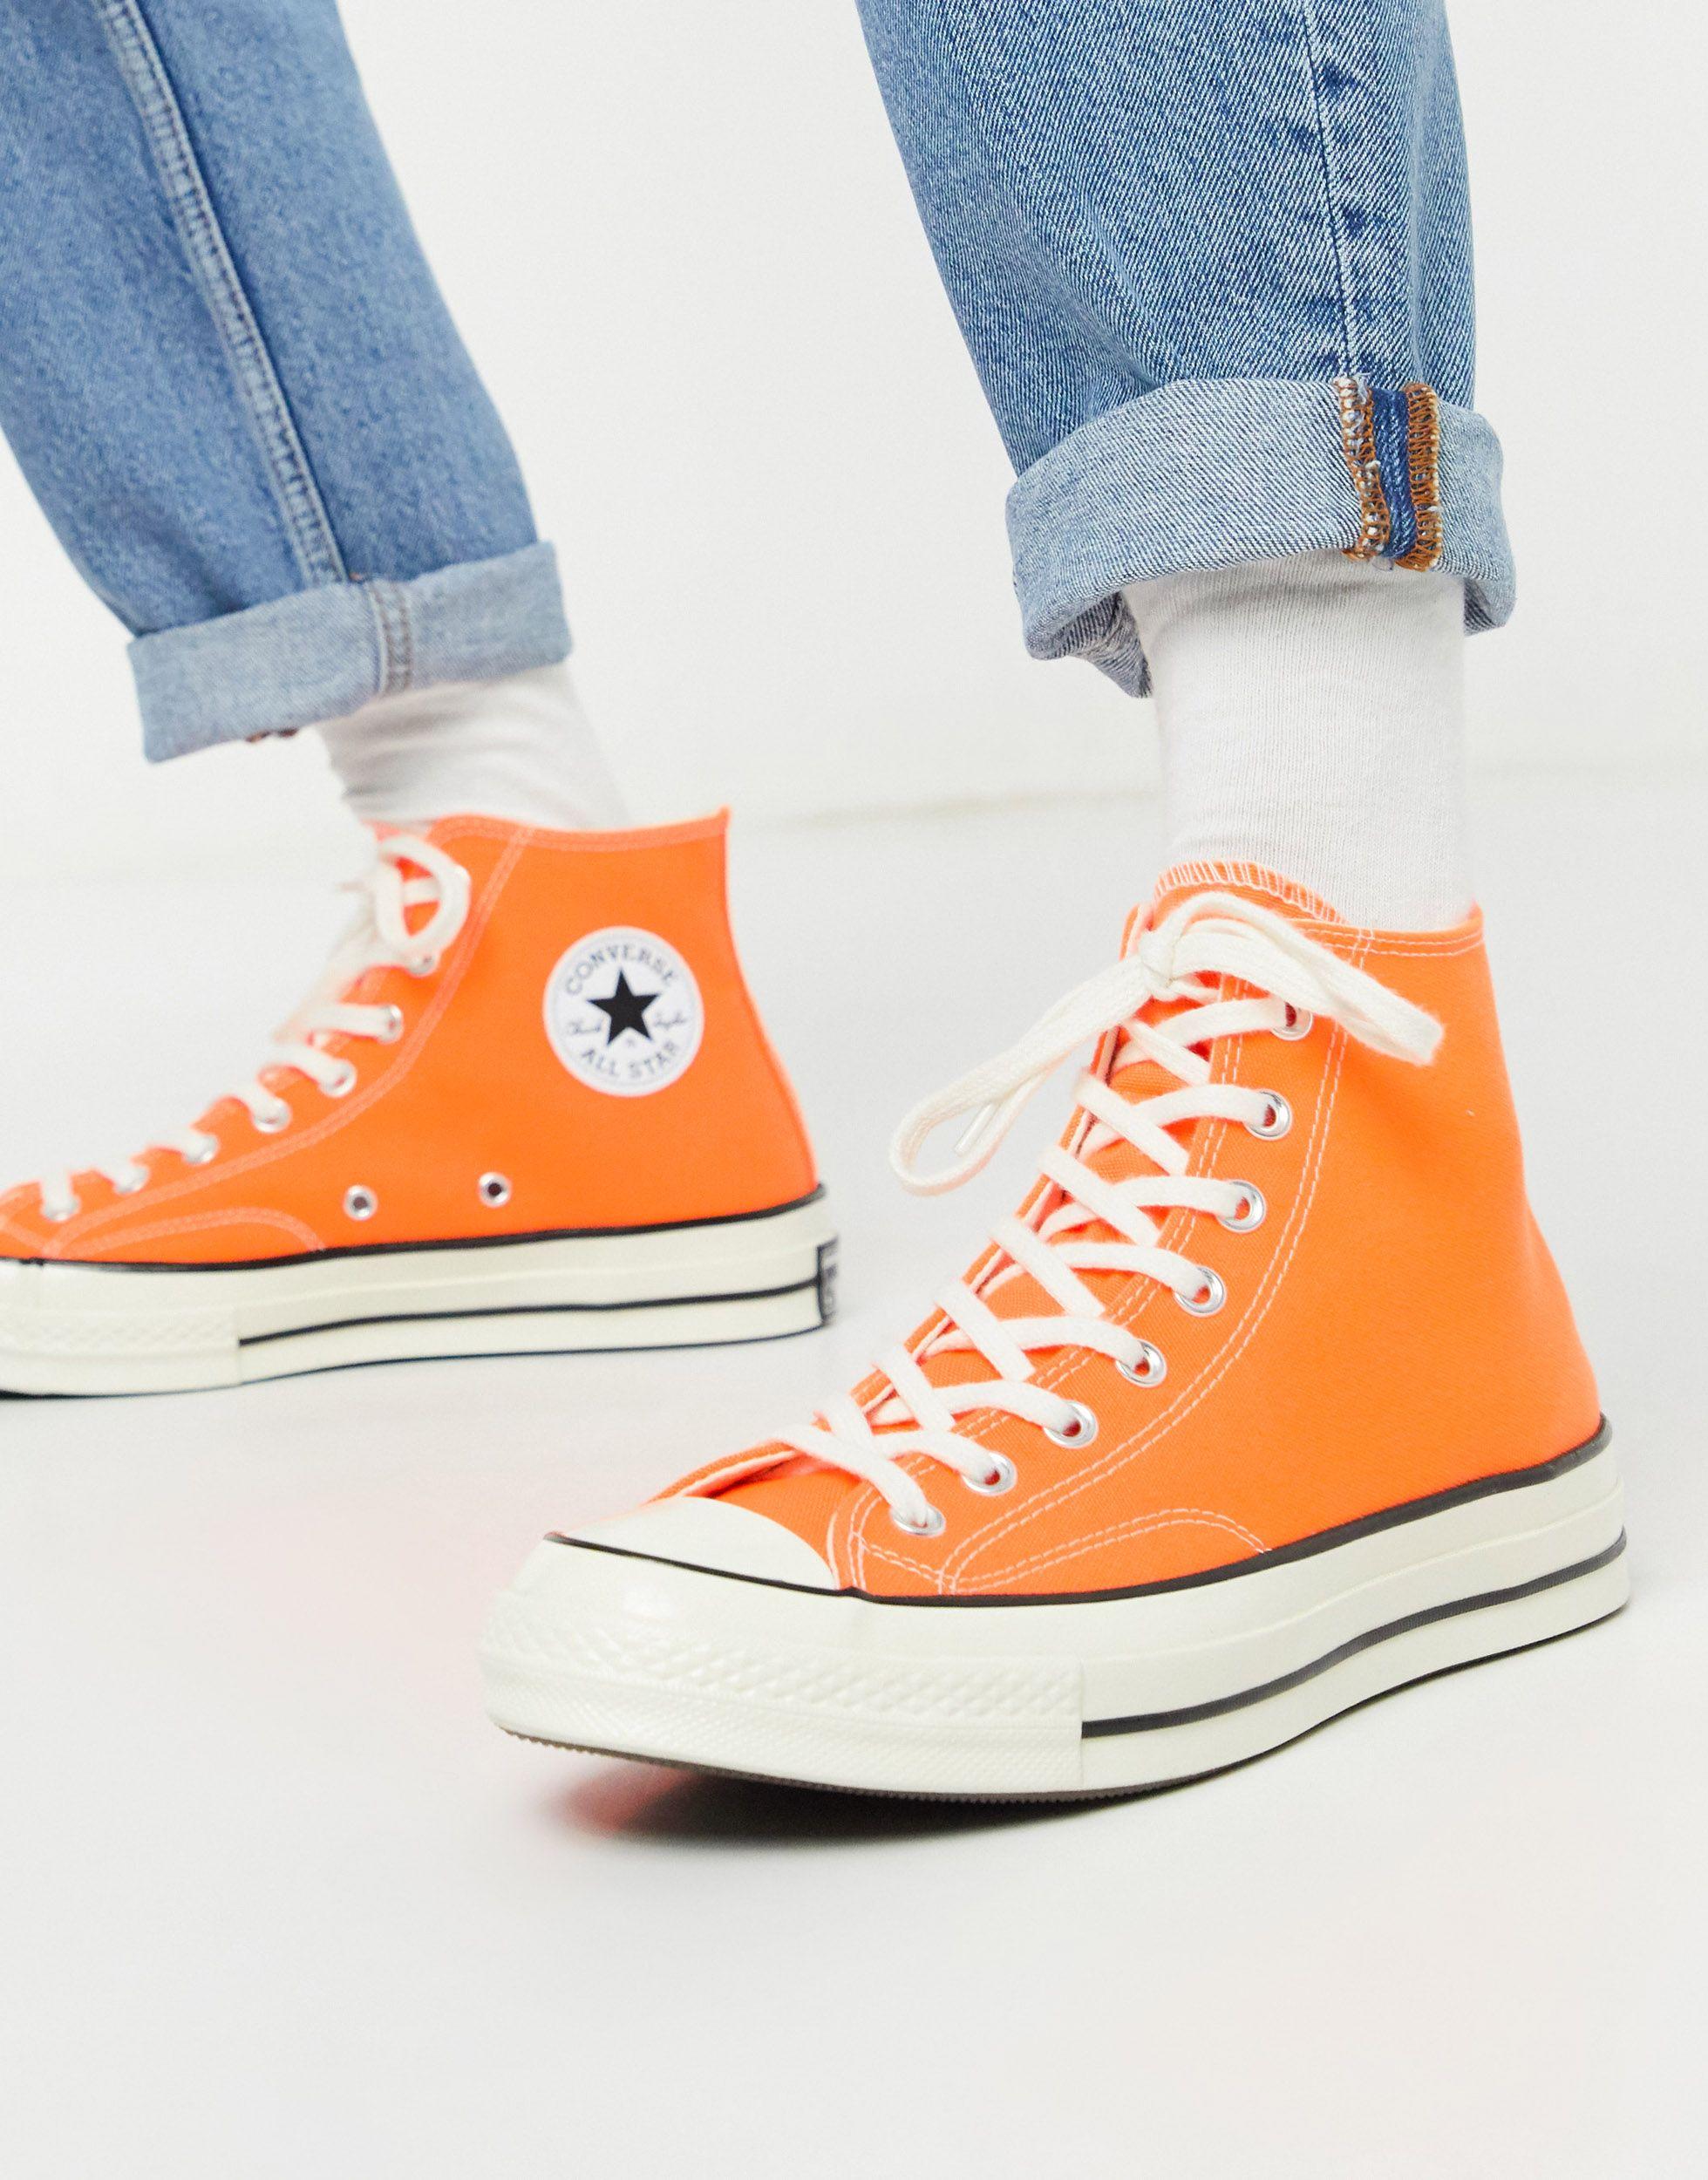 Converse Chuck 70 Hi Sneakers in Orange | Lyst